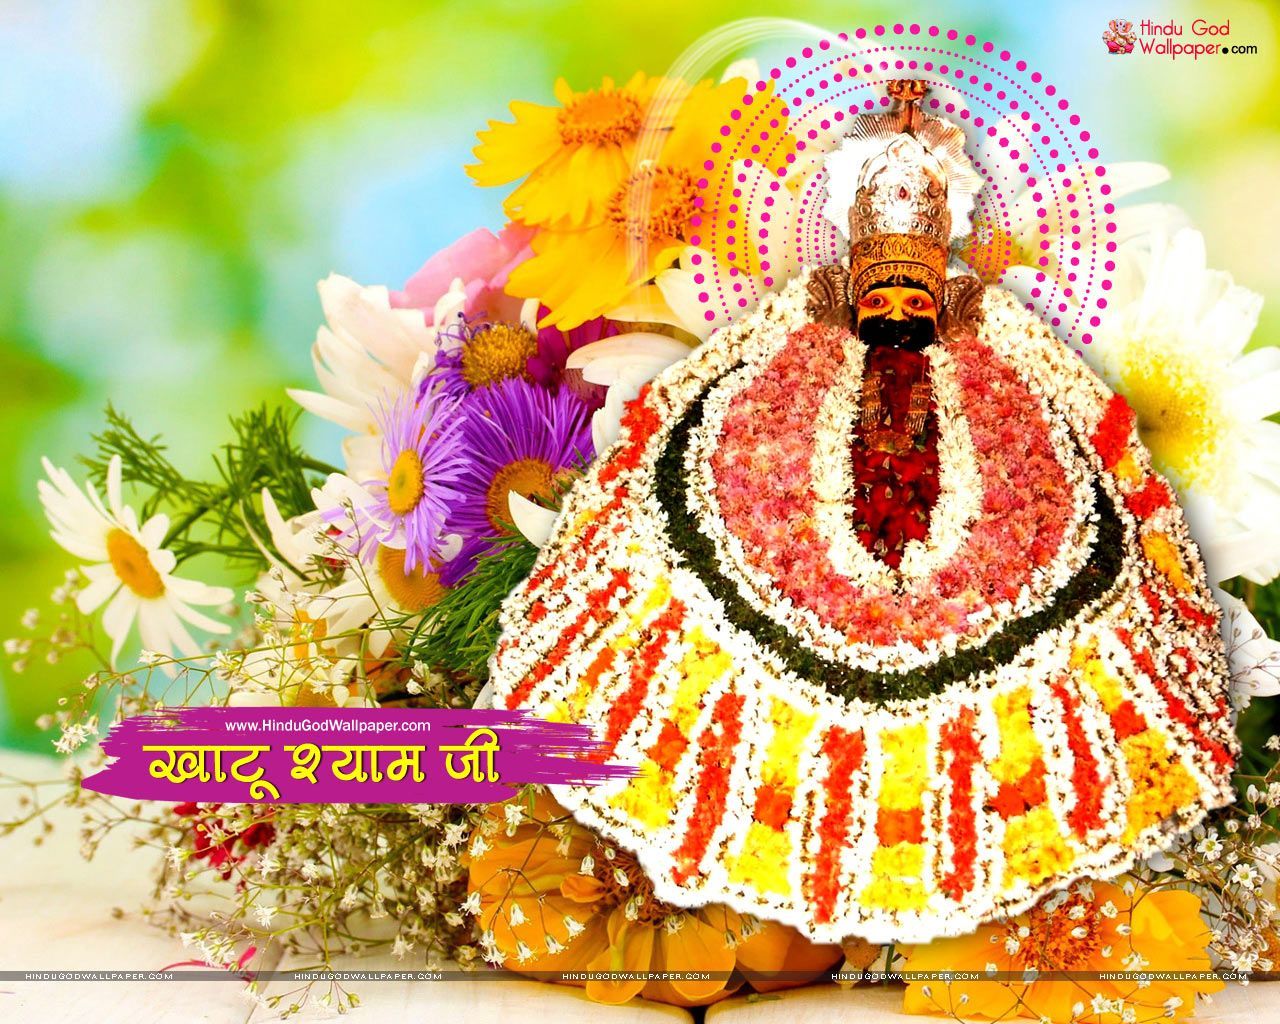 Shri Khatu Shyam Ji HD Wallpaper Free Download. Wallpaper free